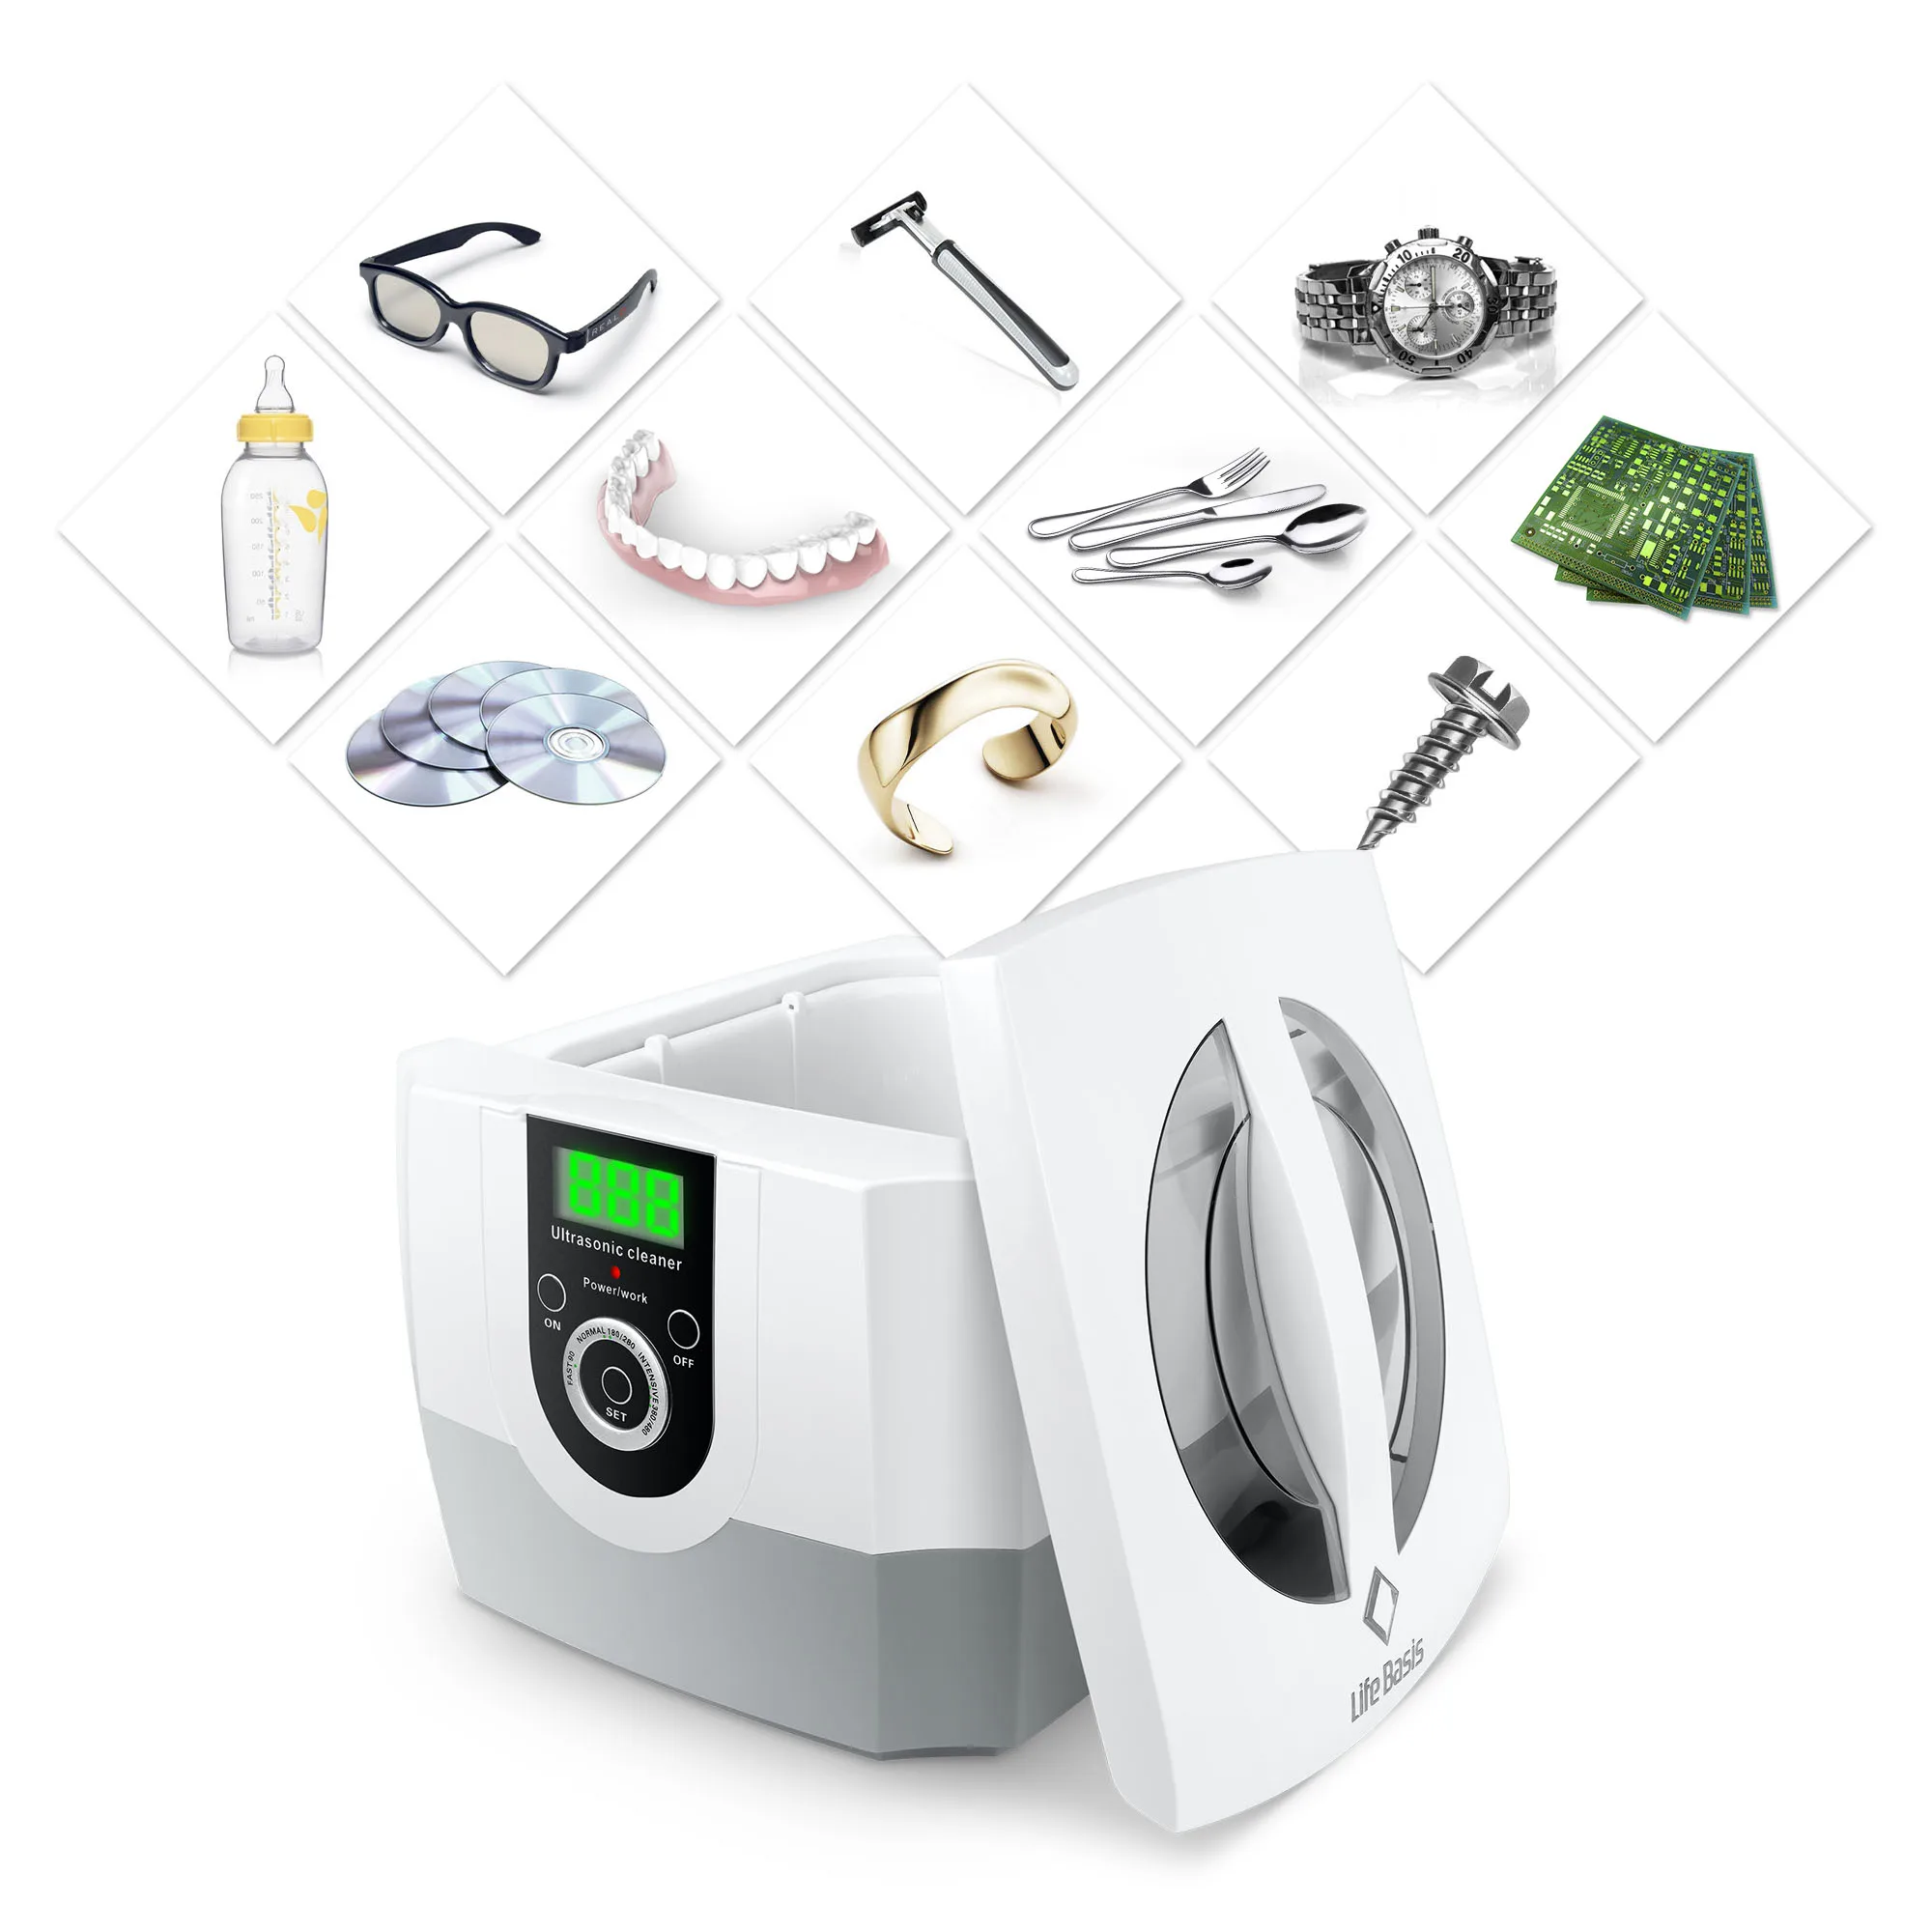 CD-7920 ultrasonic cleaning washing machine digital eyeglasses ultrasonic cleaner